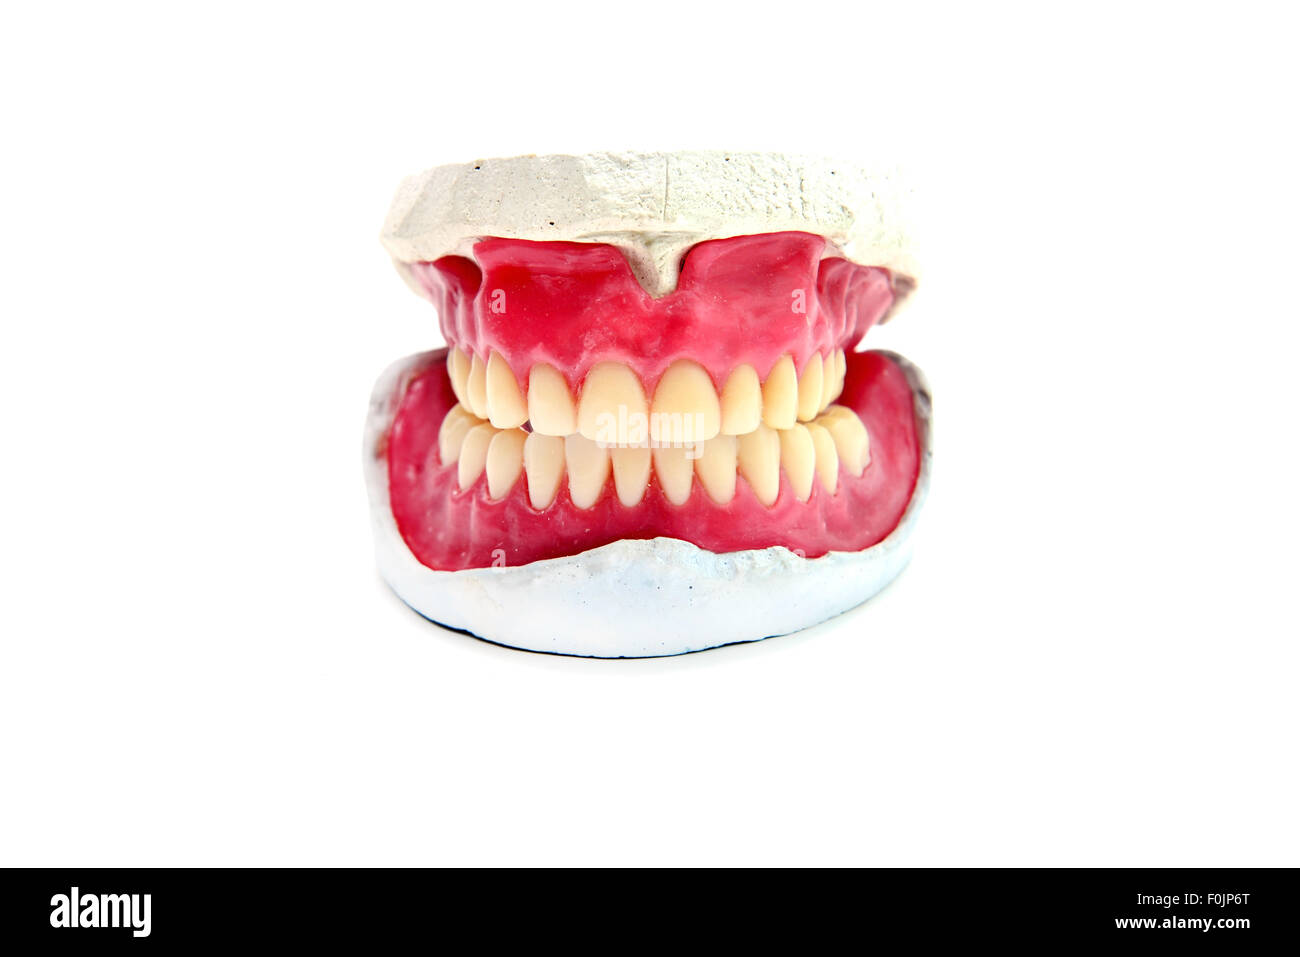 Cera umana denti dentale stampo isolato su bianco Foto Stock